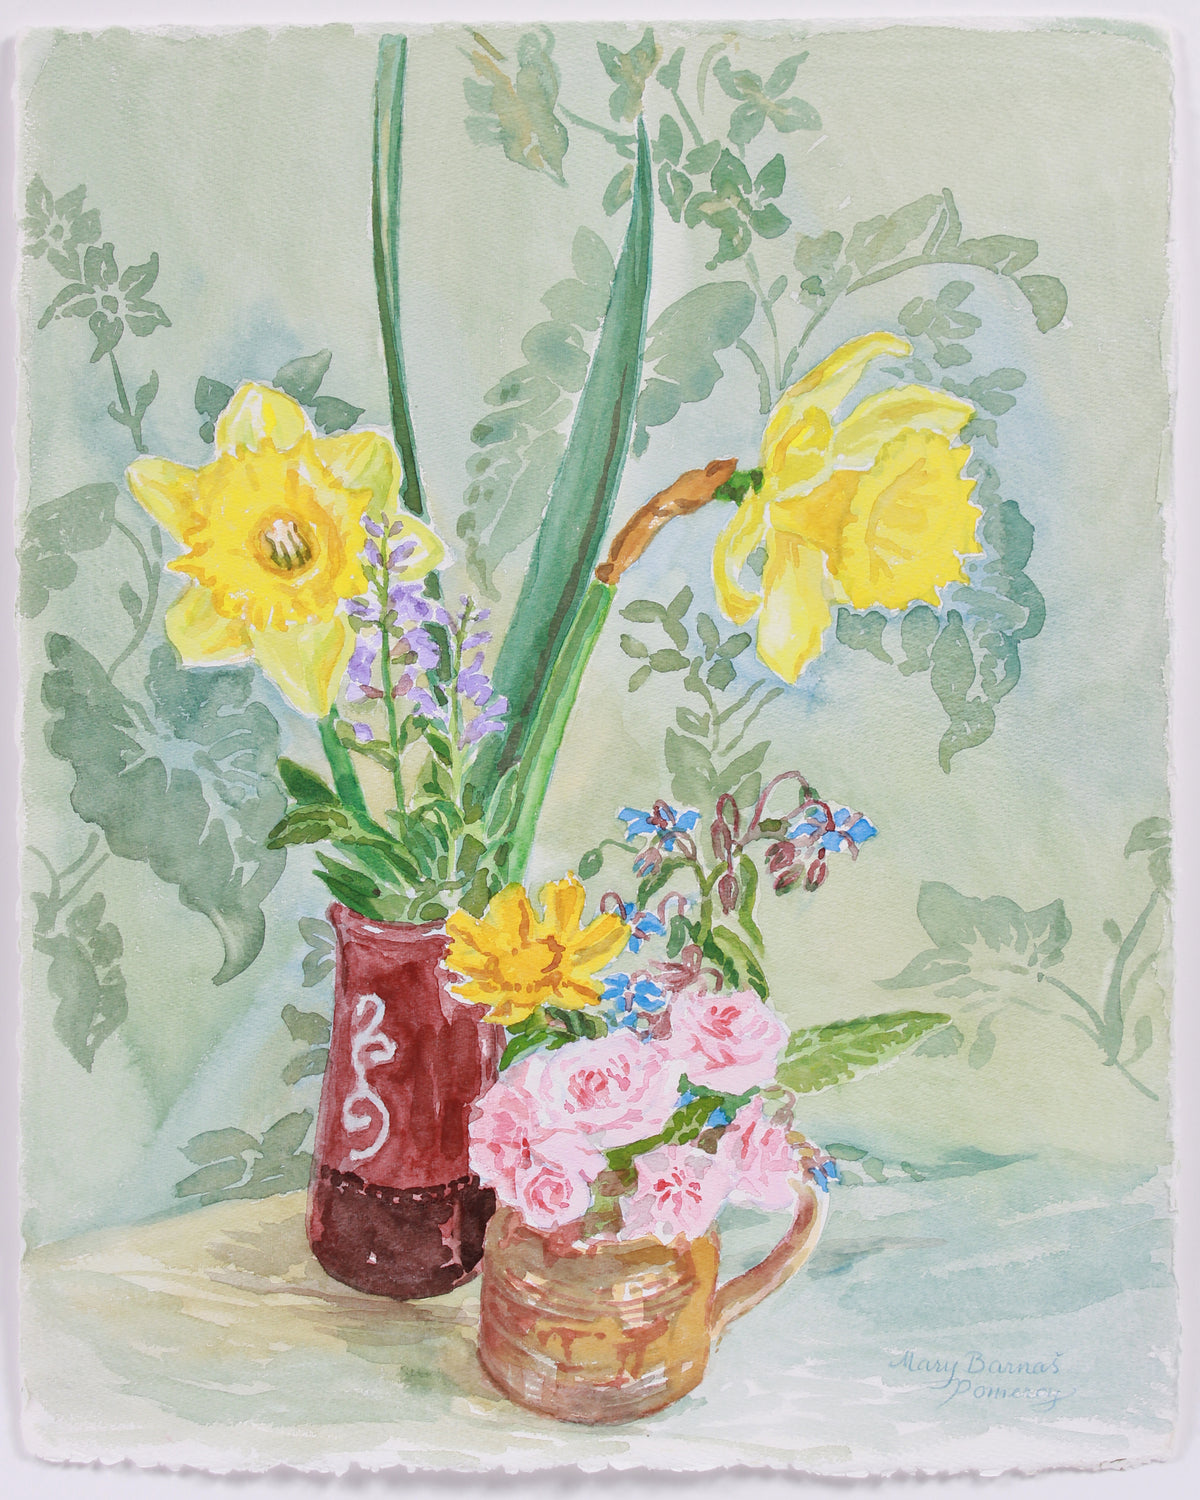 &lt;i&gt;Two April Bouquets&lt;/i&gt; &lt;br&gt;April 9 Watercolor &lt;br&gt;&lt;br&gt;#B0532